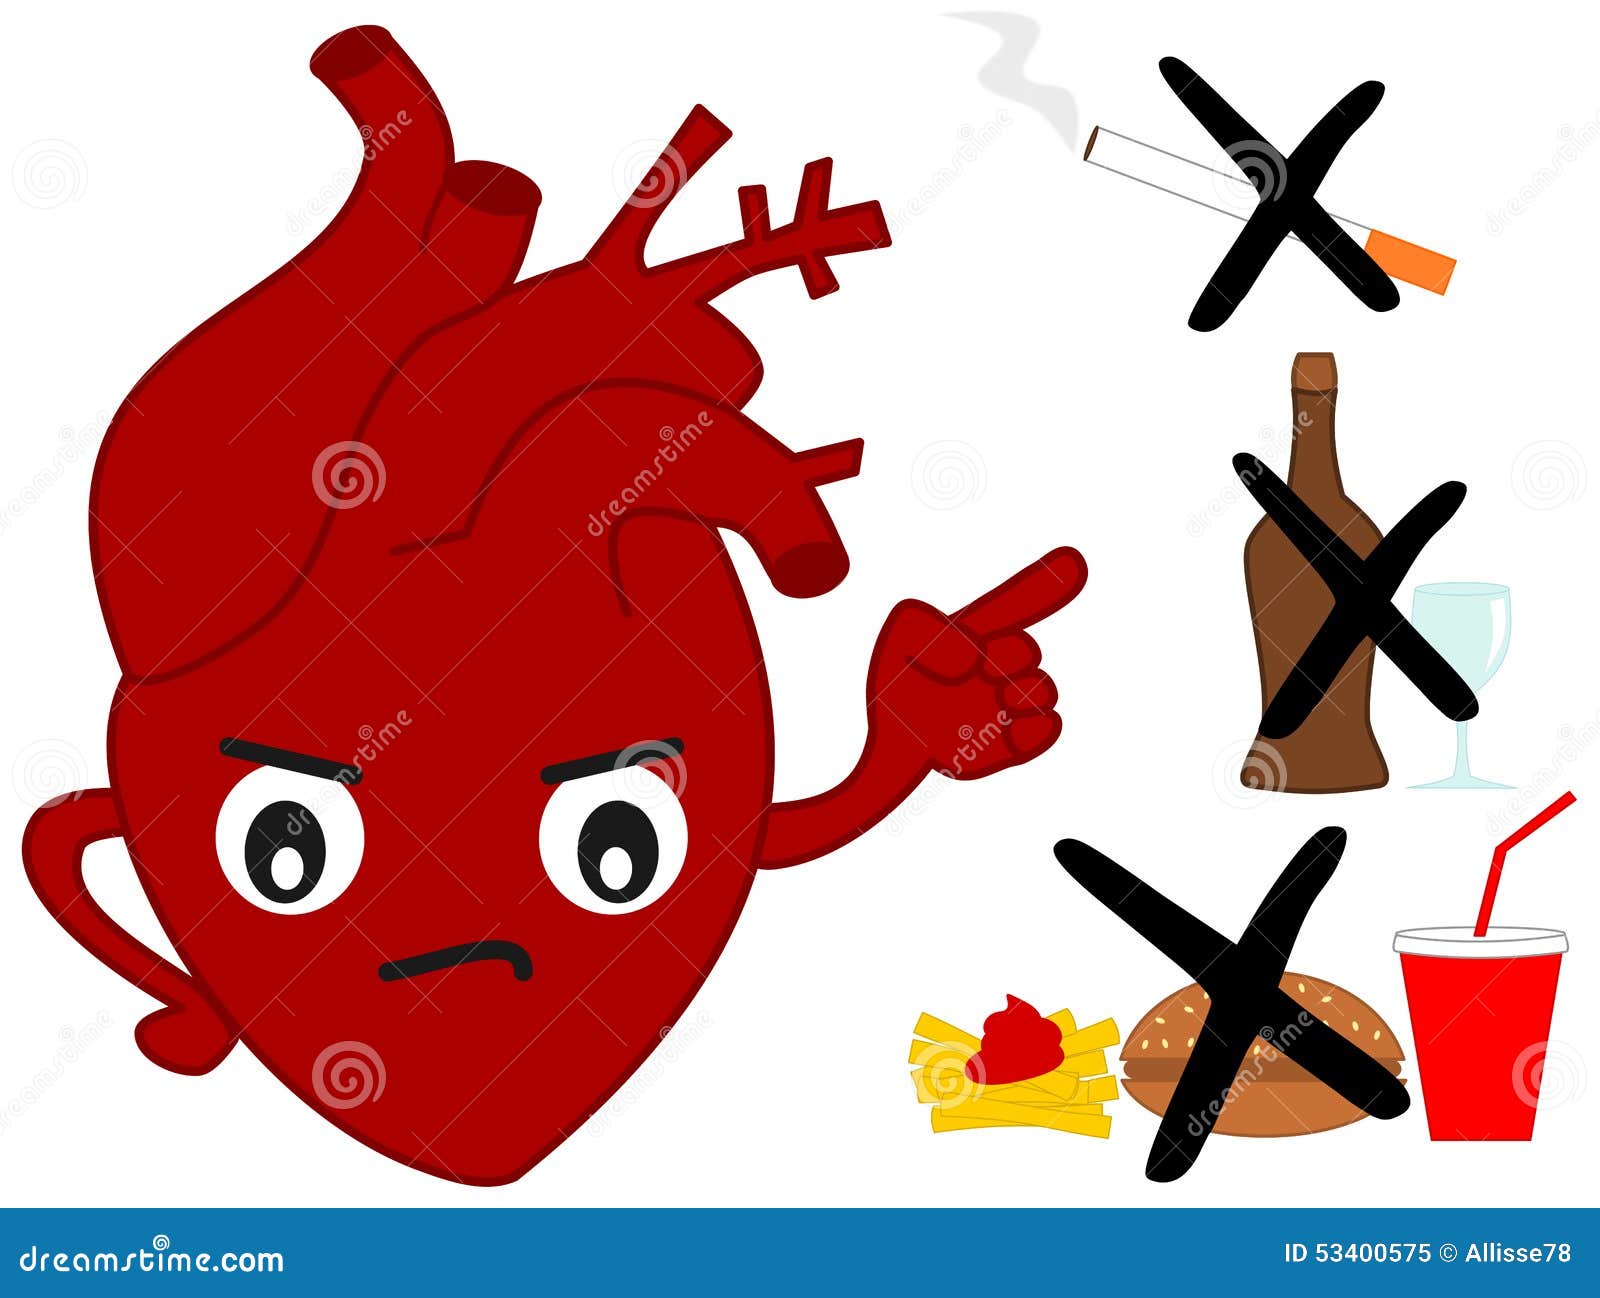 Human Heart Versus Bad Habits Cartoon Illustration Stock Illustration -  Illustration of habit, symbol: 53400575